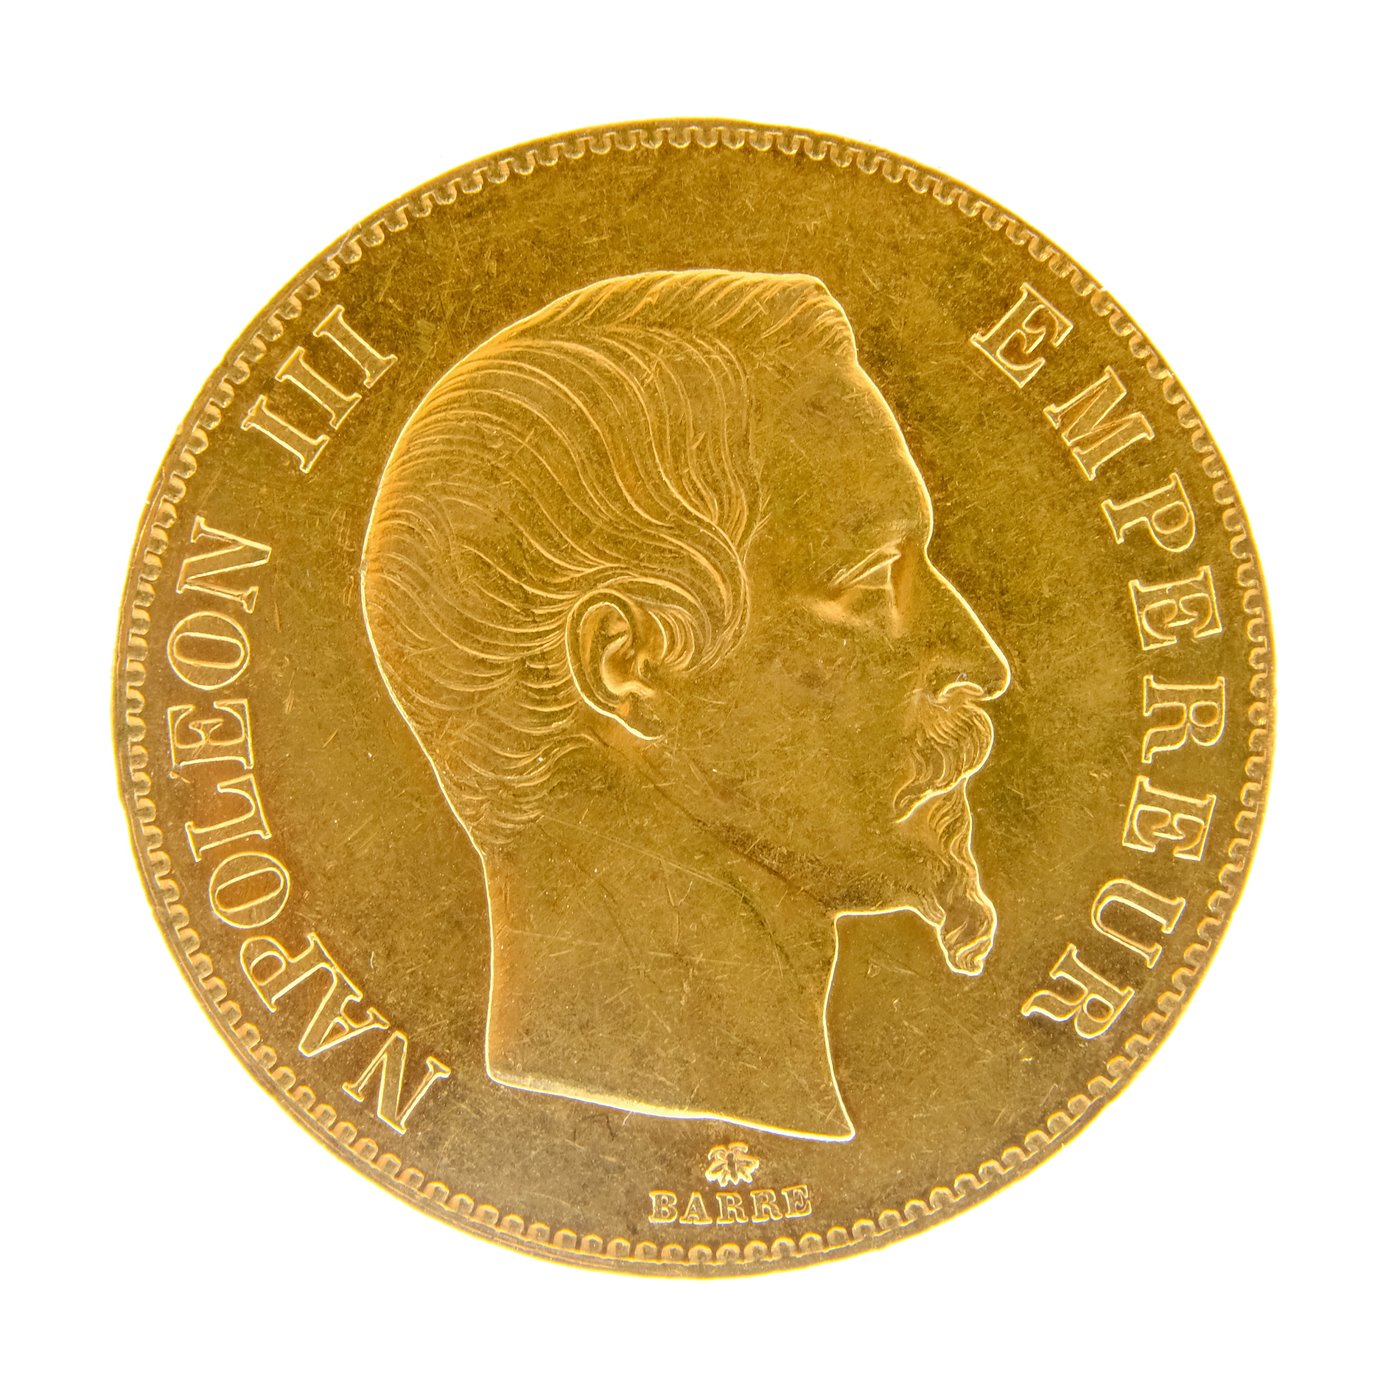 .. - Francie 100 frank 1858 BB Strasbourg král NAPOLEON III. znak kotvy, zlato 900/1000, hmotnost hrubá 32,56 g